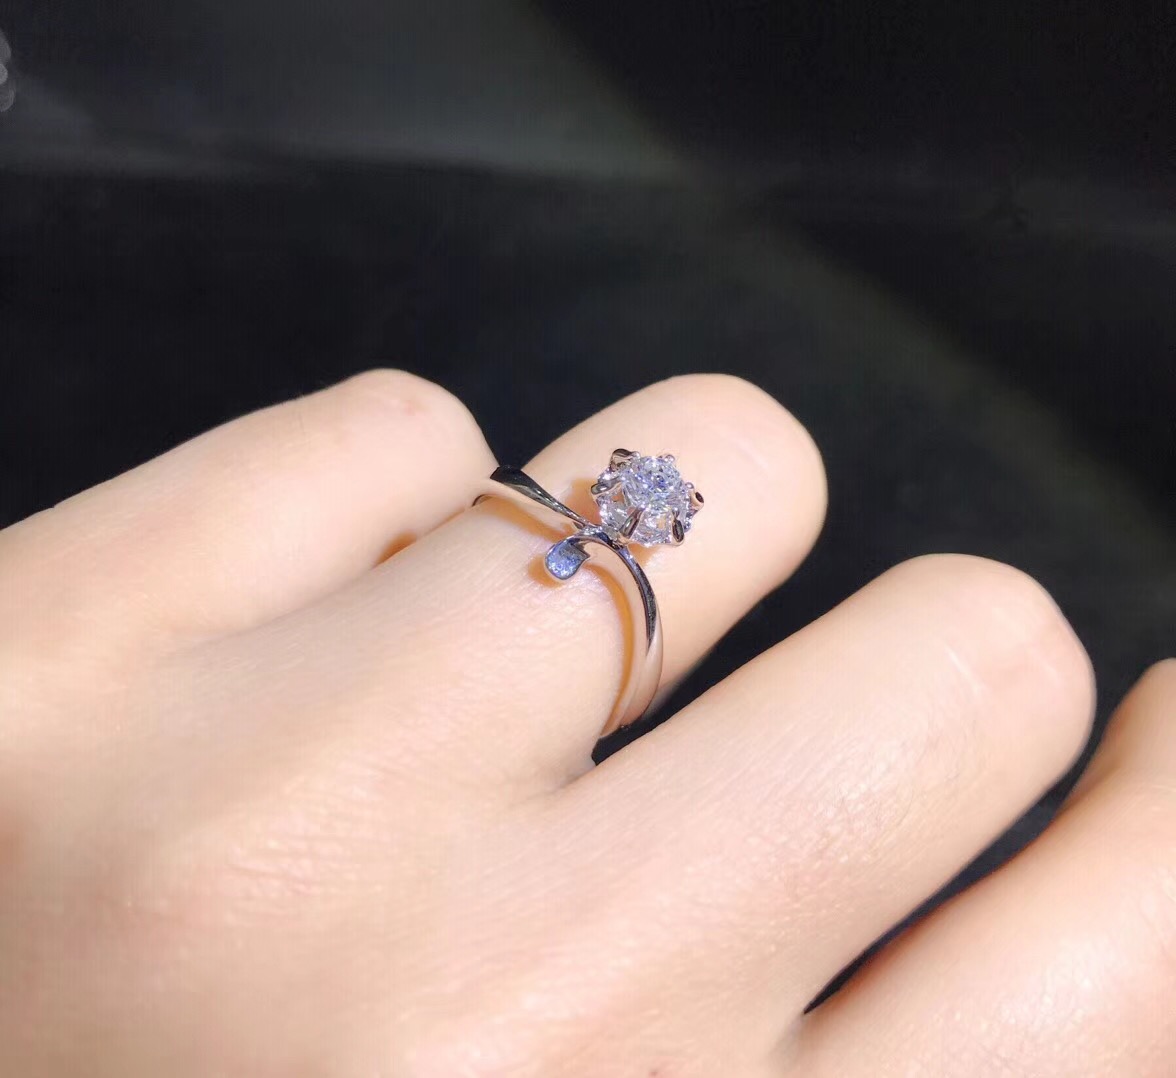 RW02068-2 Engagement Diamond Ring in 18k White Gold